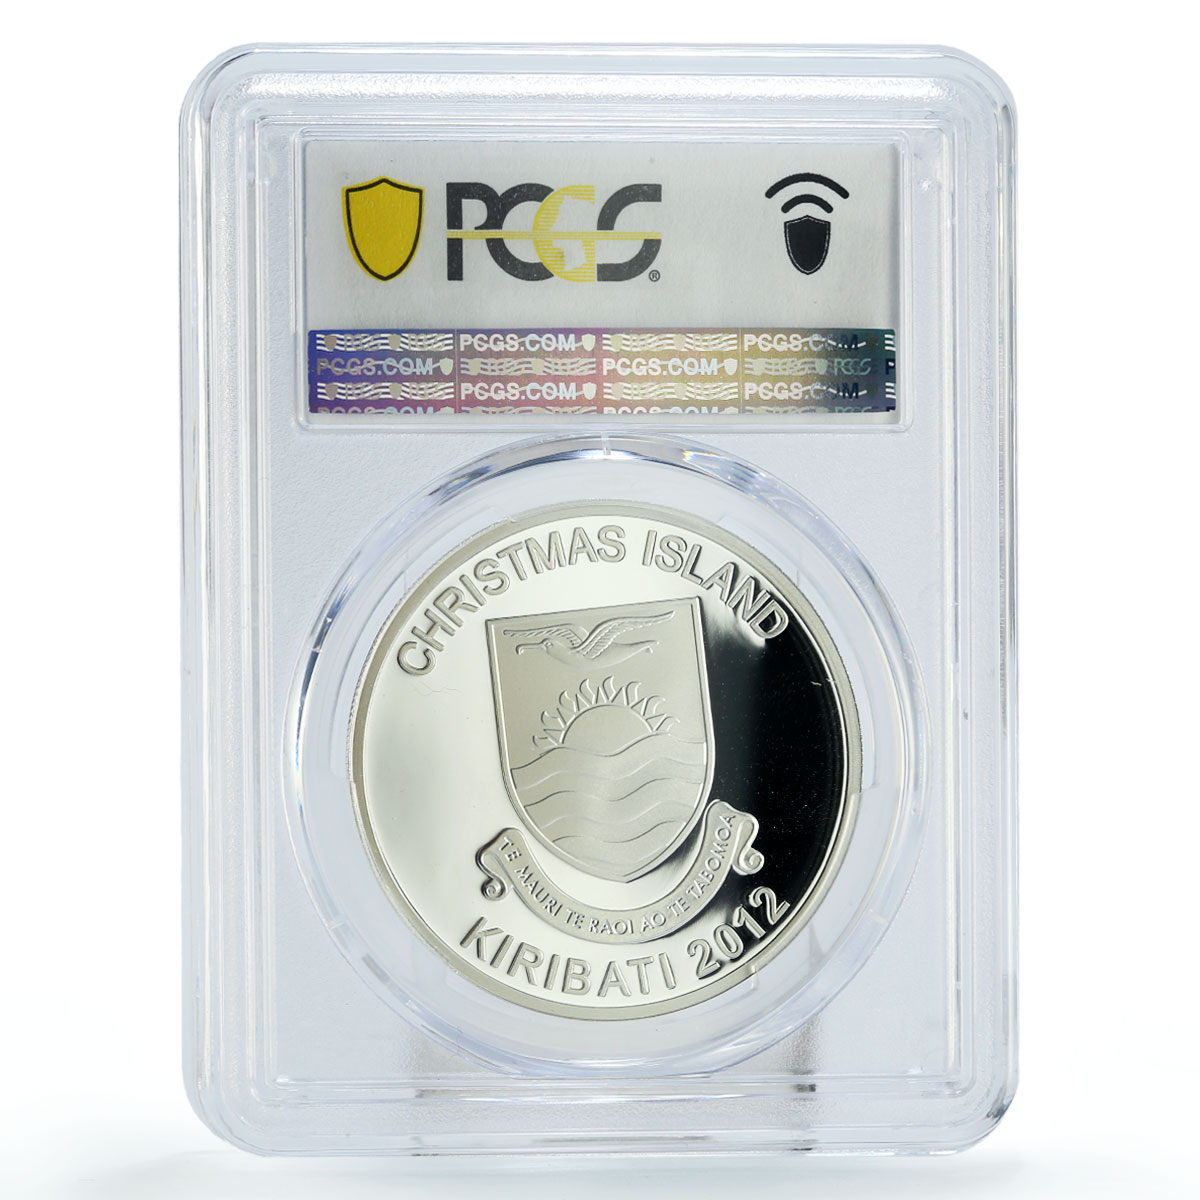 Kiribati 5 dollars New Year Christmas Santa Claus PR69 PCGS silver coin 2012